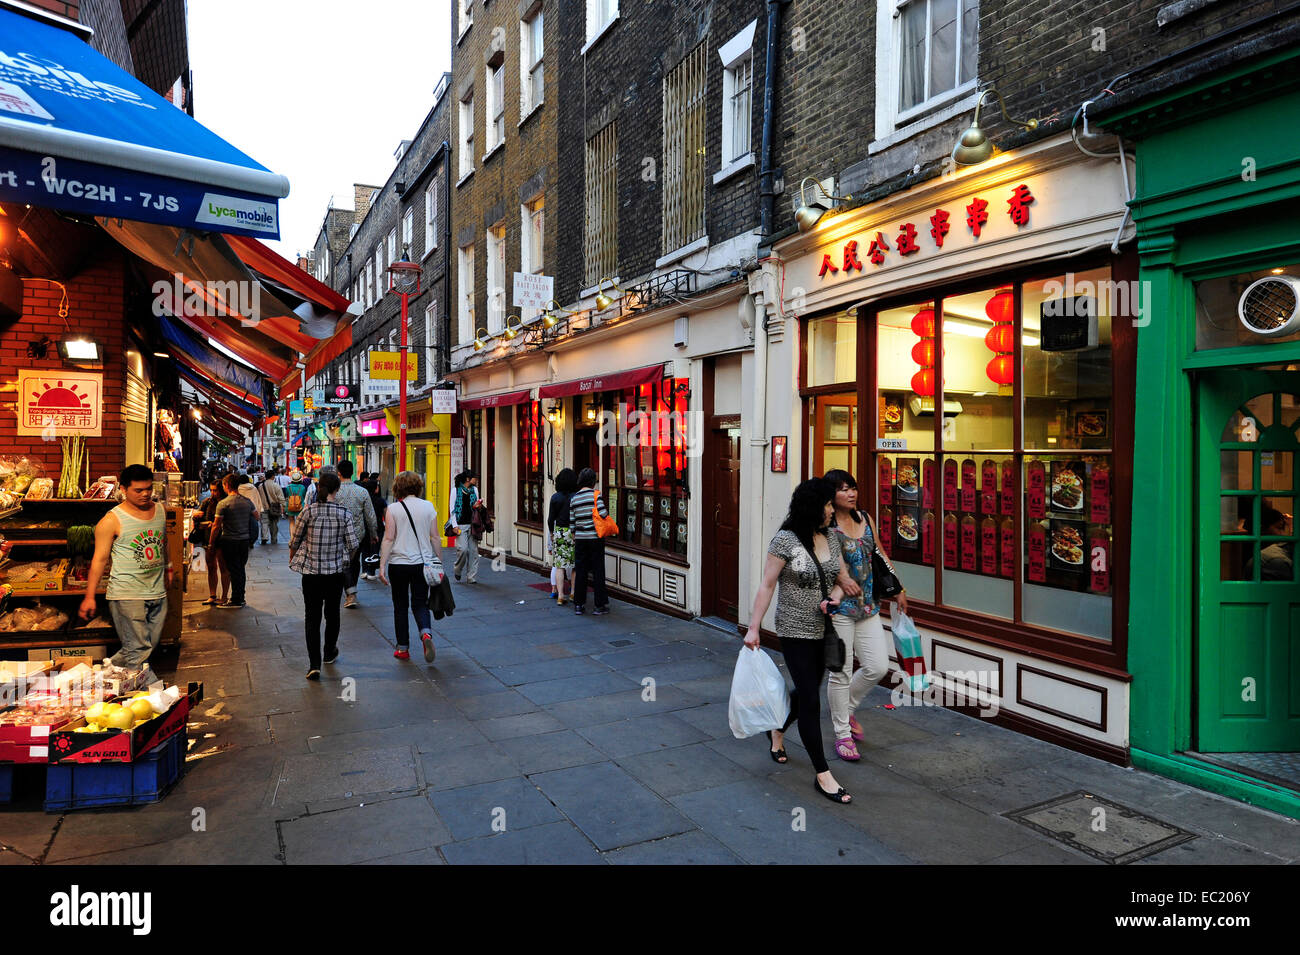 People shopping, Newport Court, Chinatown, Soho, West End, London, England, United Kingdom Stock Photo